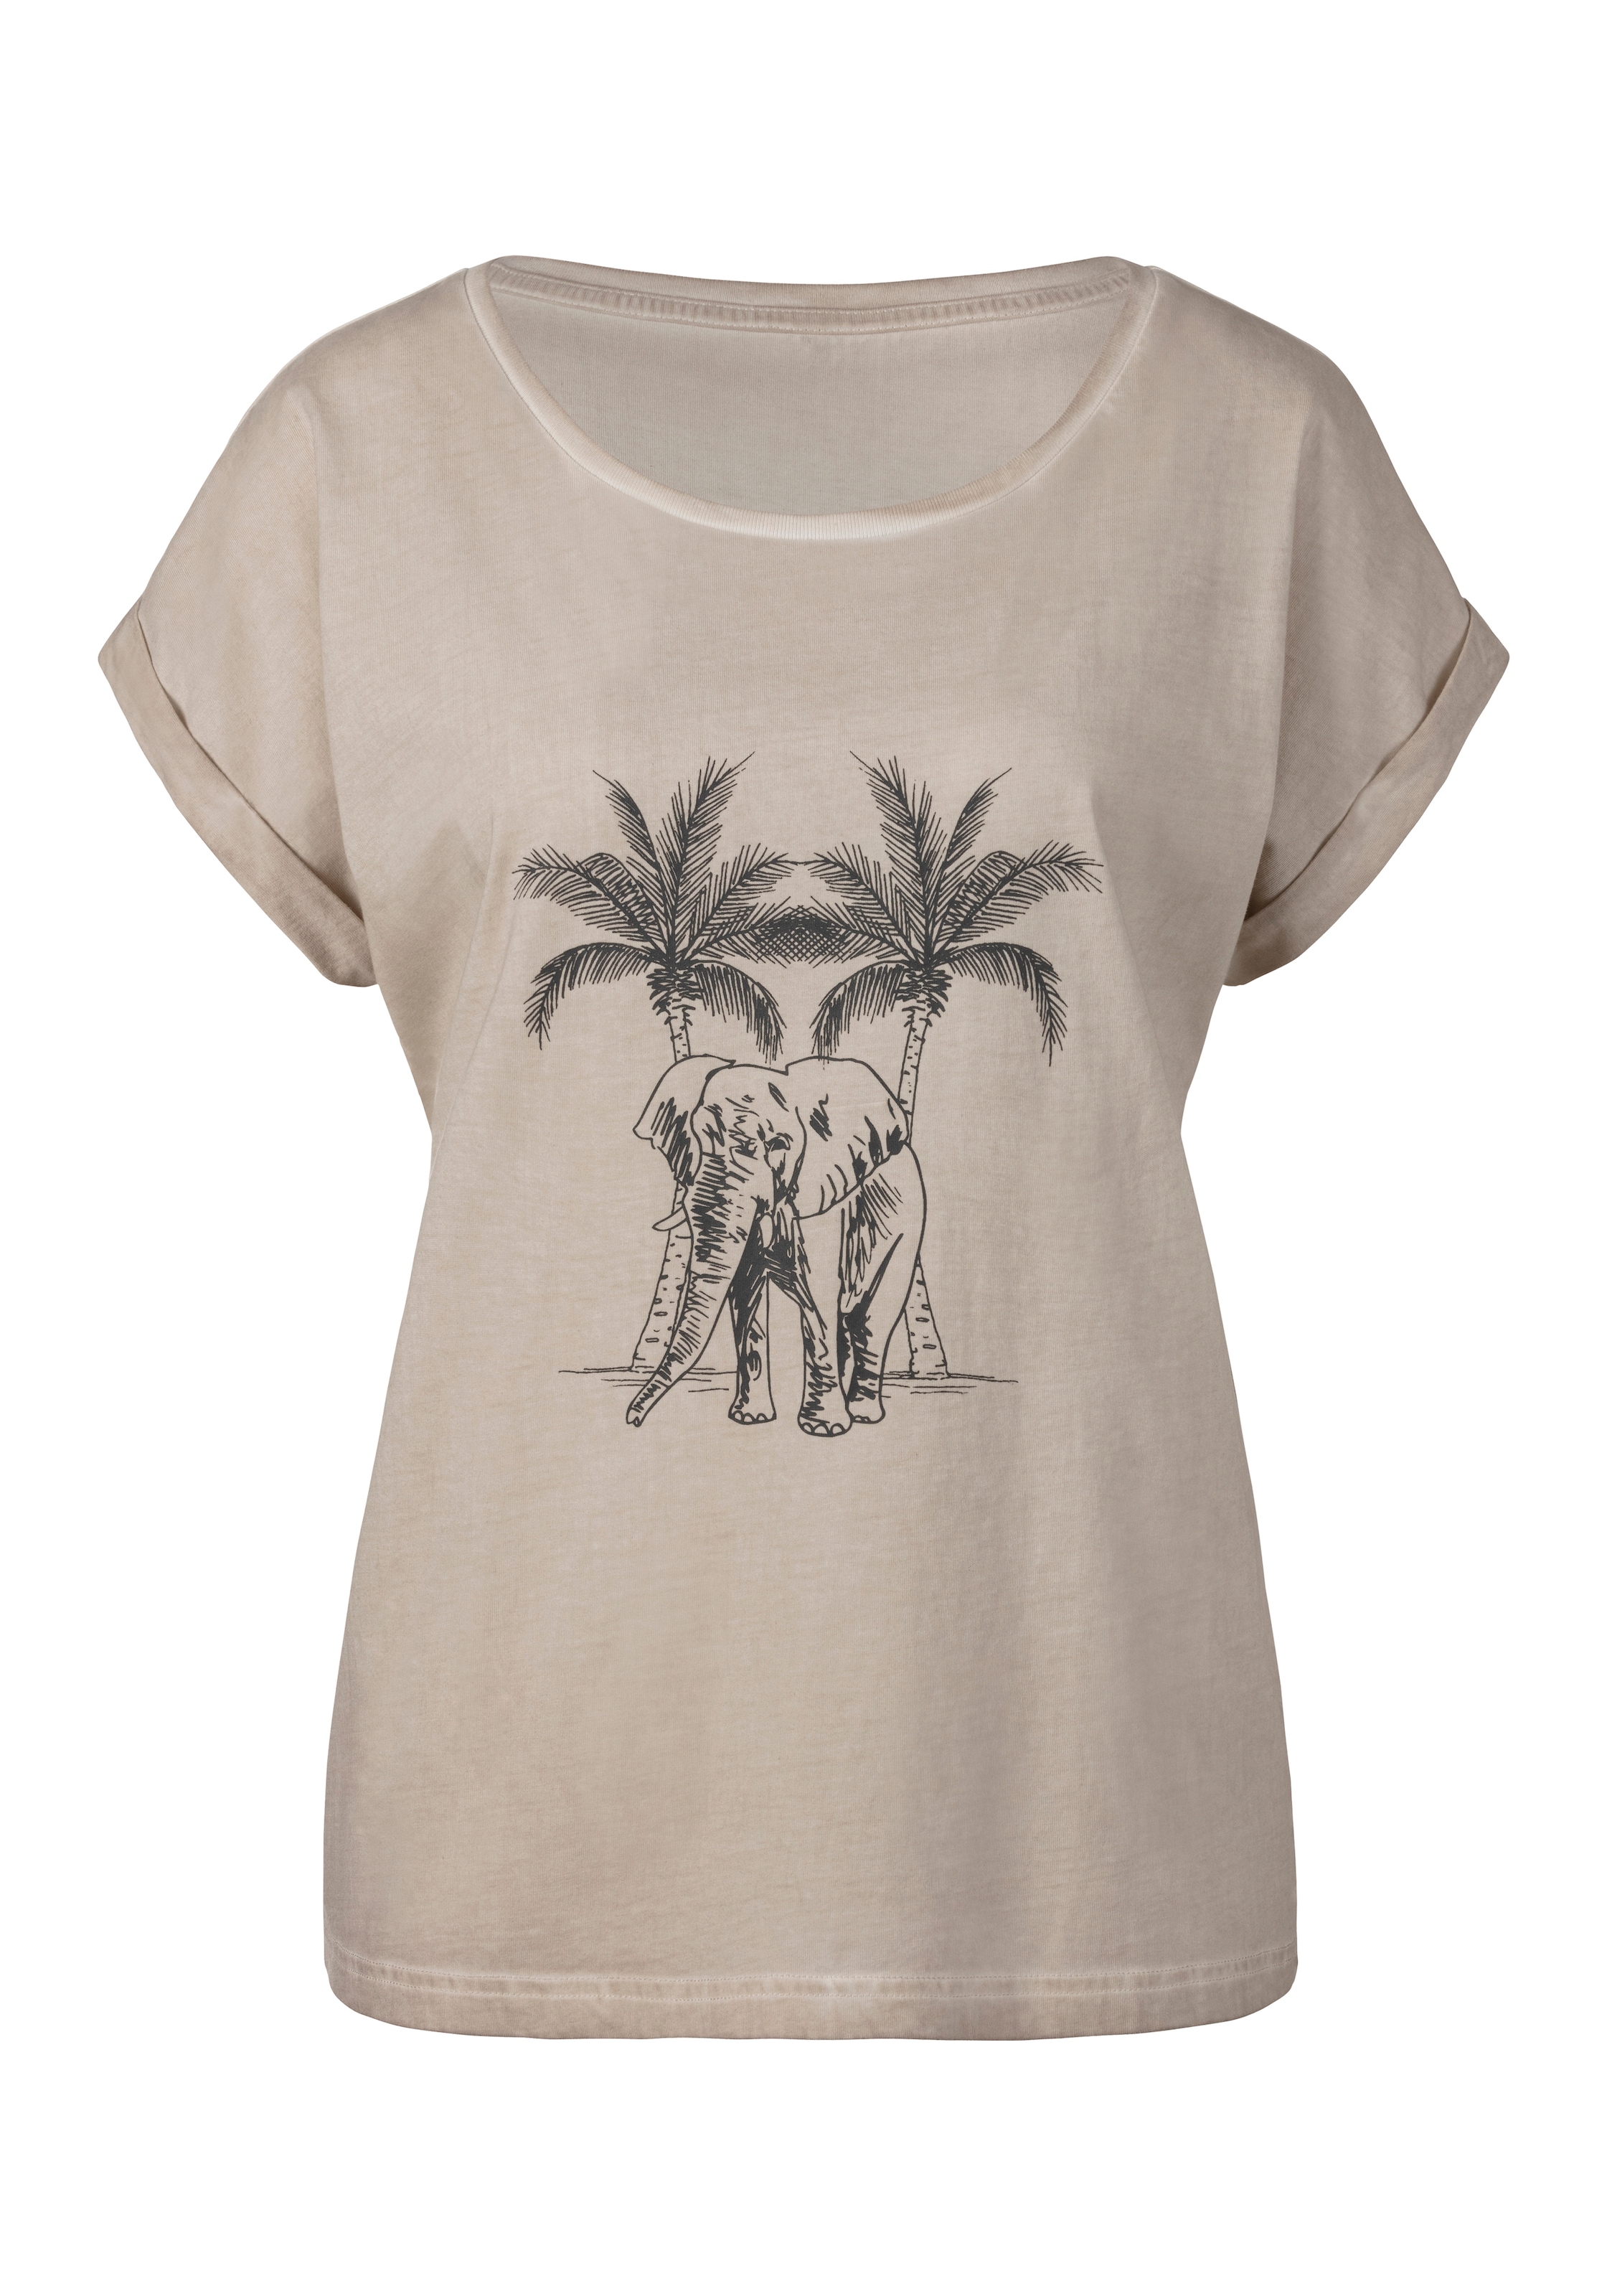 LASCANA Kurzarmshirt, mit Leoparden-Motiv, Damen T-Shirt, lockere Passform,  casual-chic » LASCANA | Bademode, Unterwäsche & Lingerie online kaufen